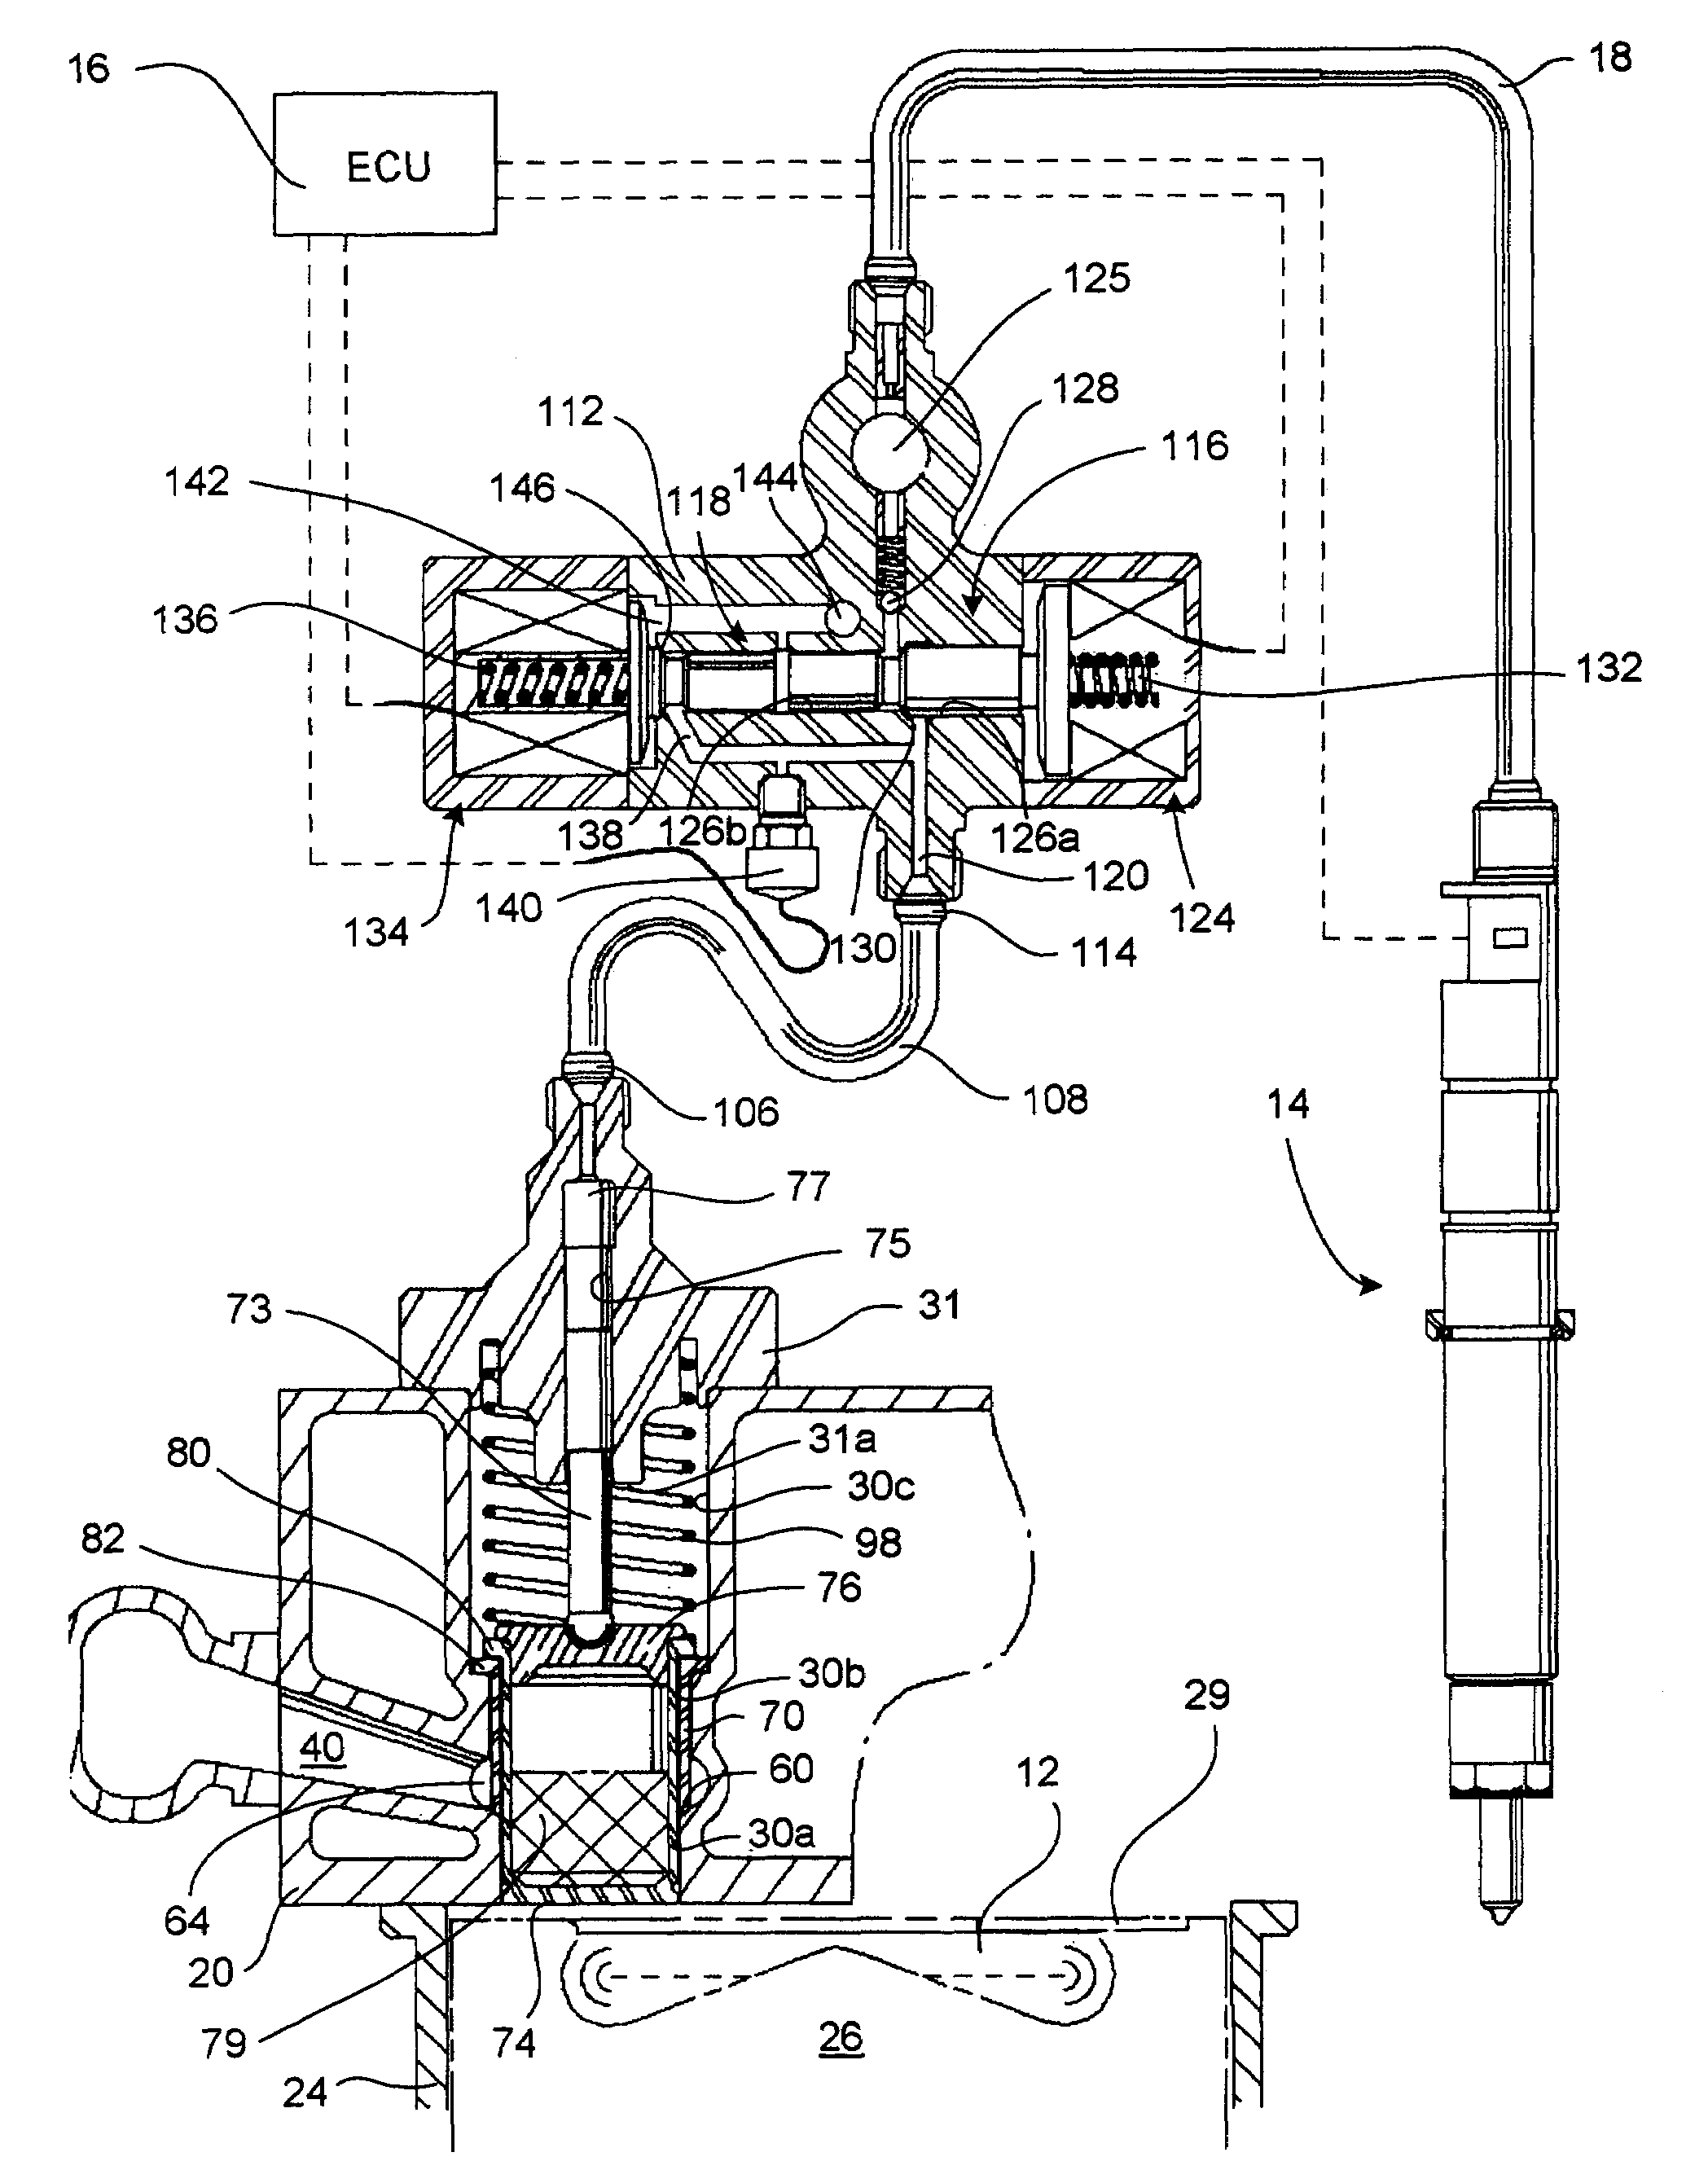 Exhaust valve arrangement and a fuel system incorporating an exhaust valve arrangement